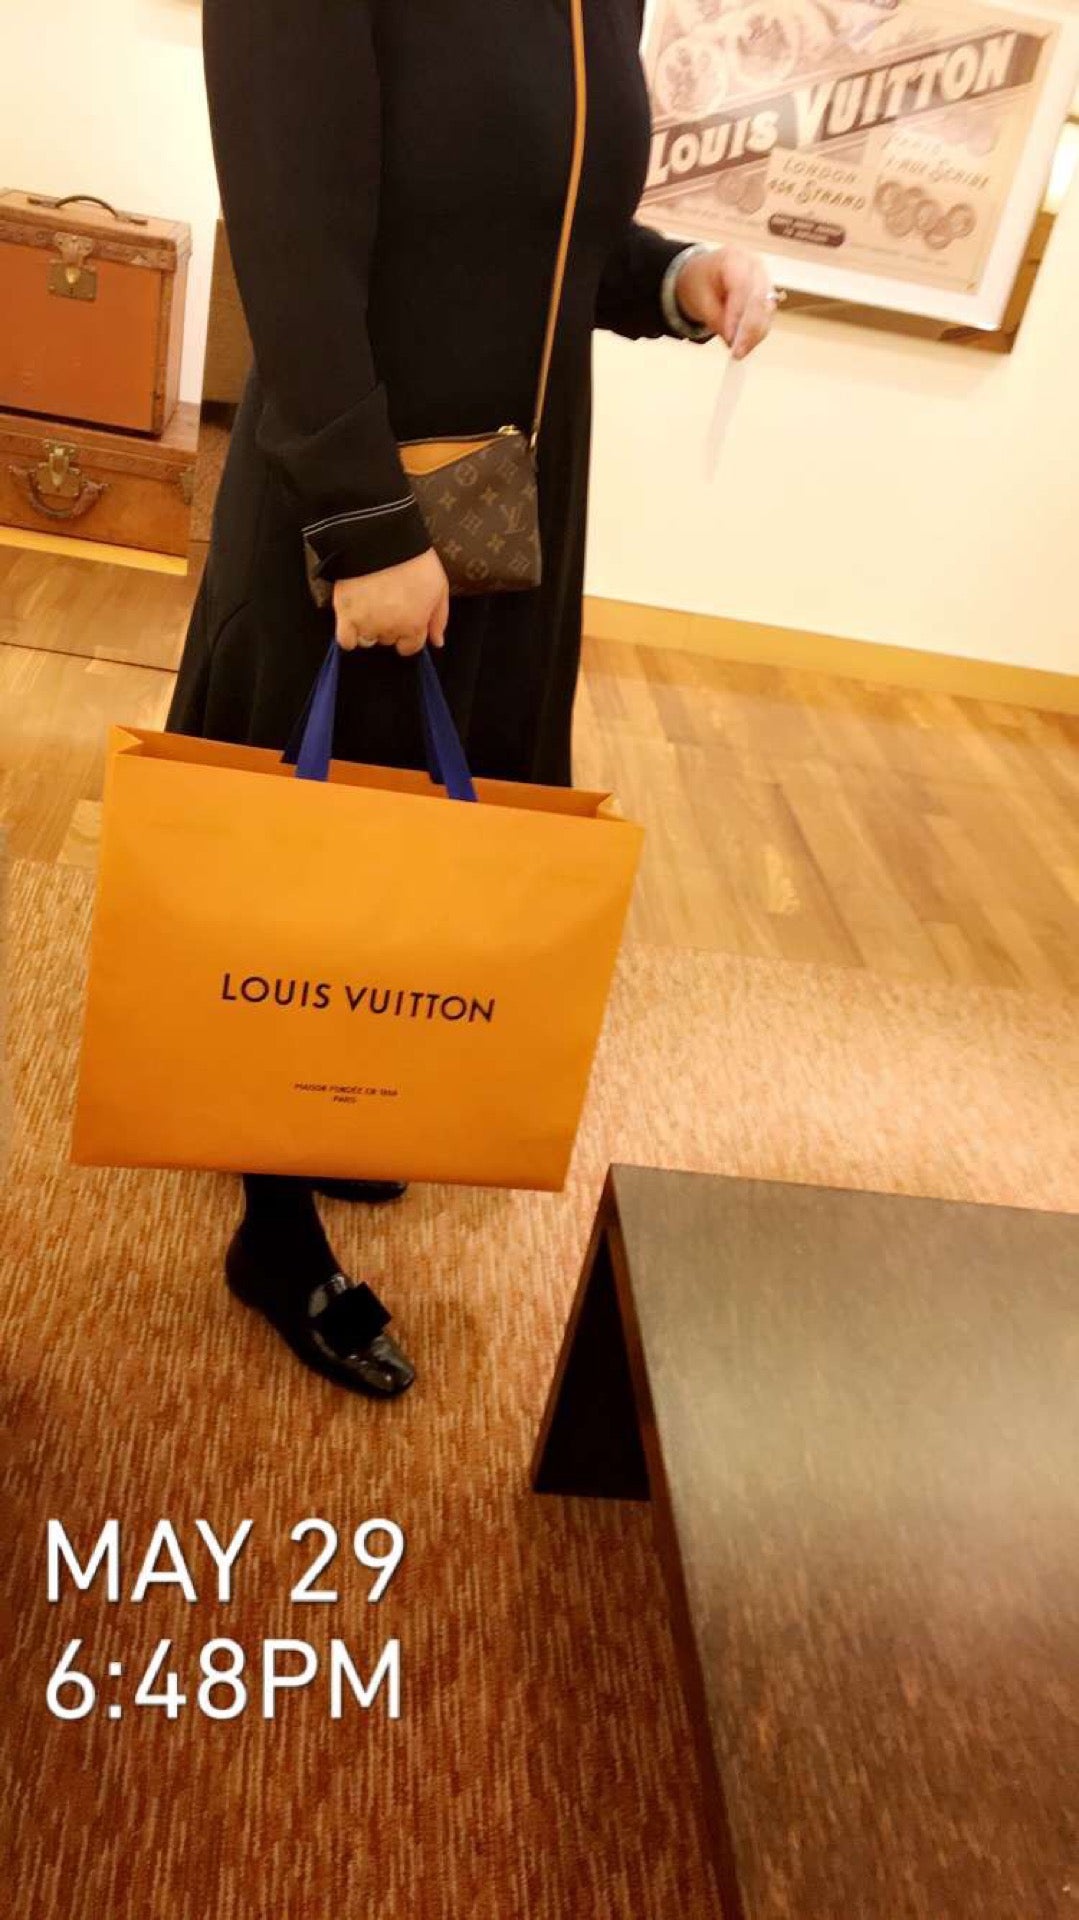 Louis Vuitton Chicago Oakbrook Center Geschäft - Vereinigte